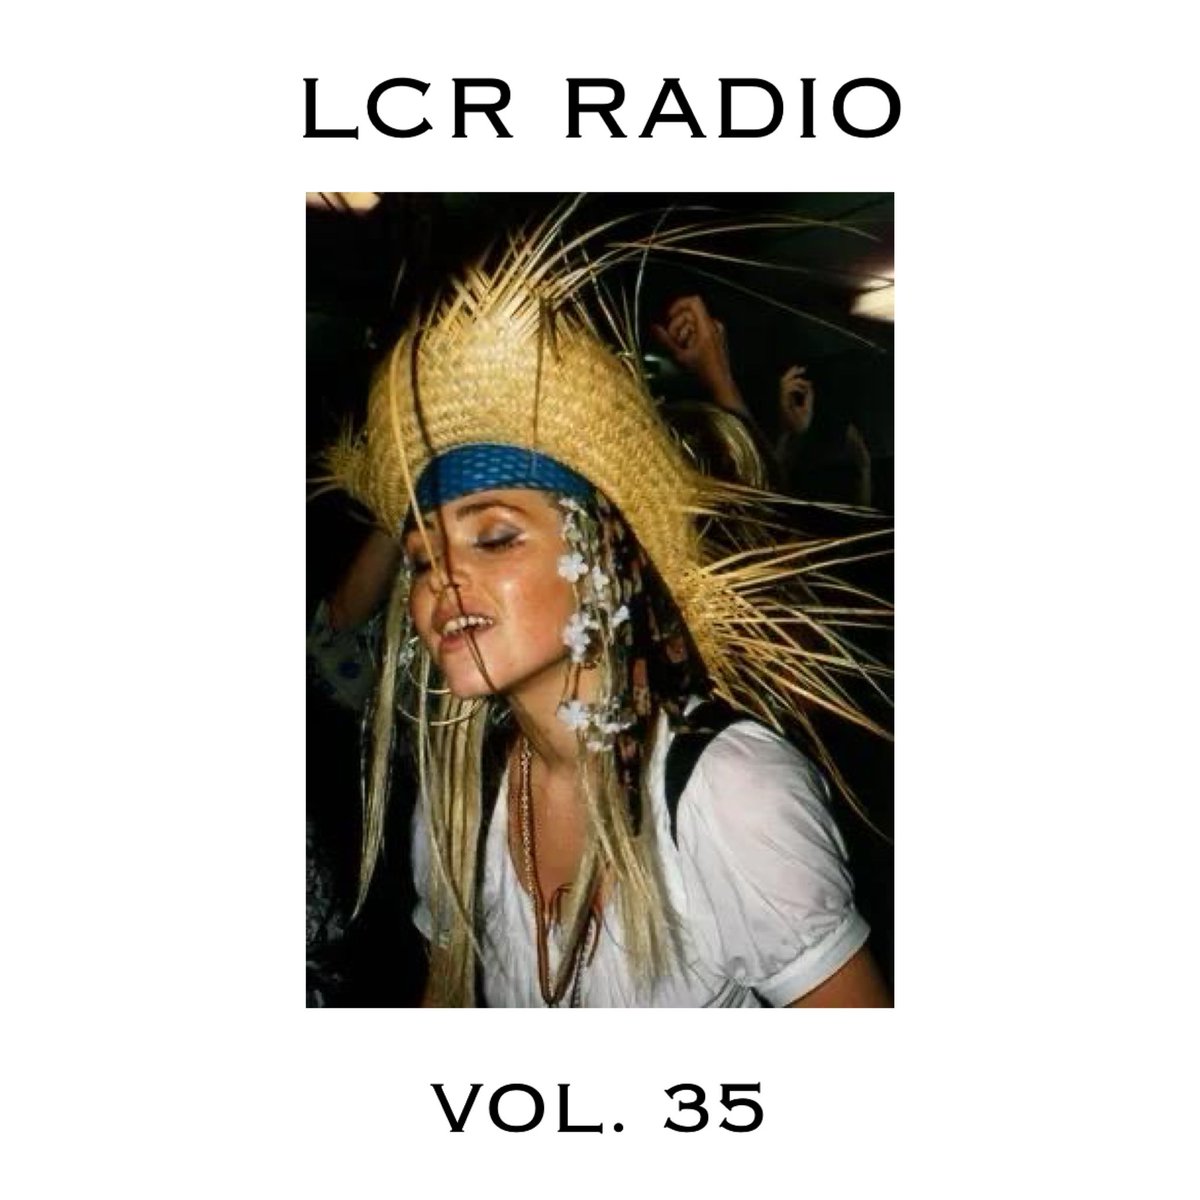 LCR RADIO VOL.35 open.spotify.com/playlist/307pB…